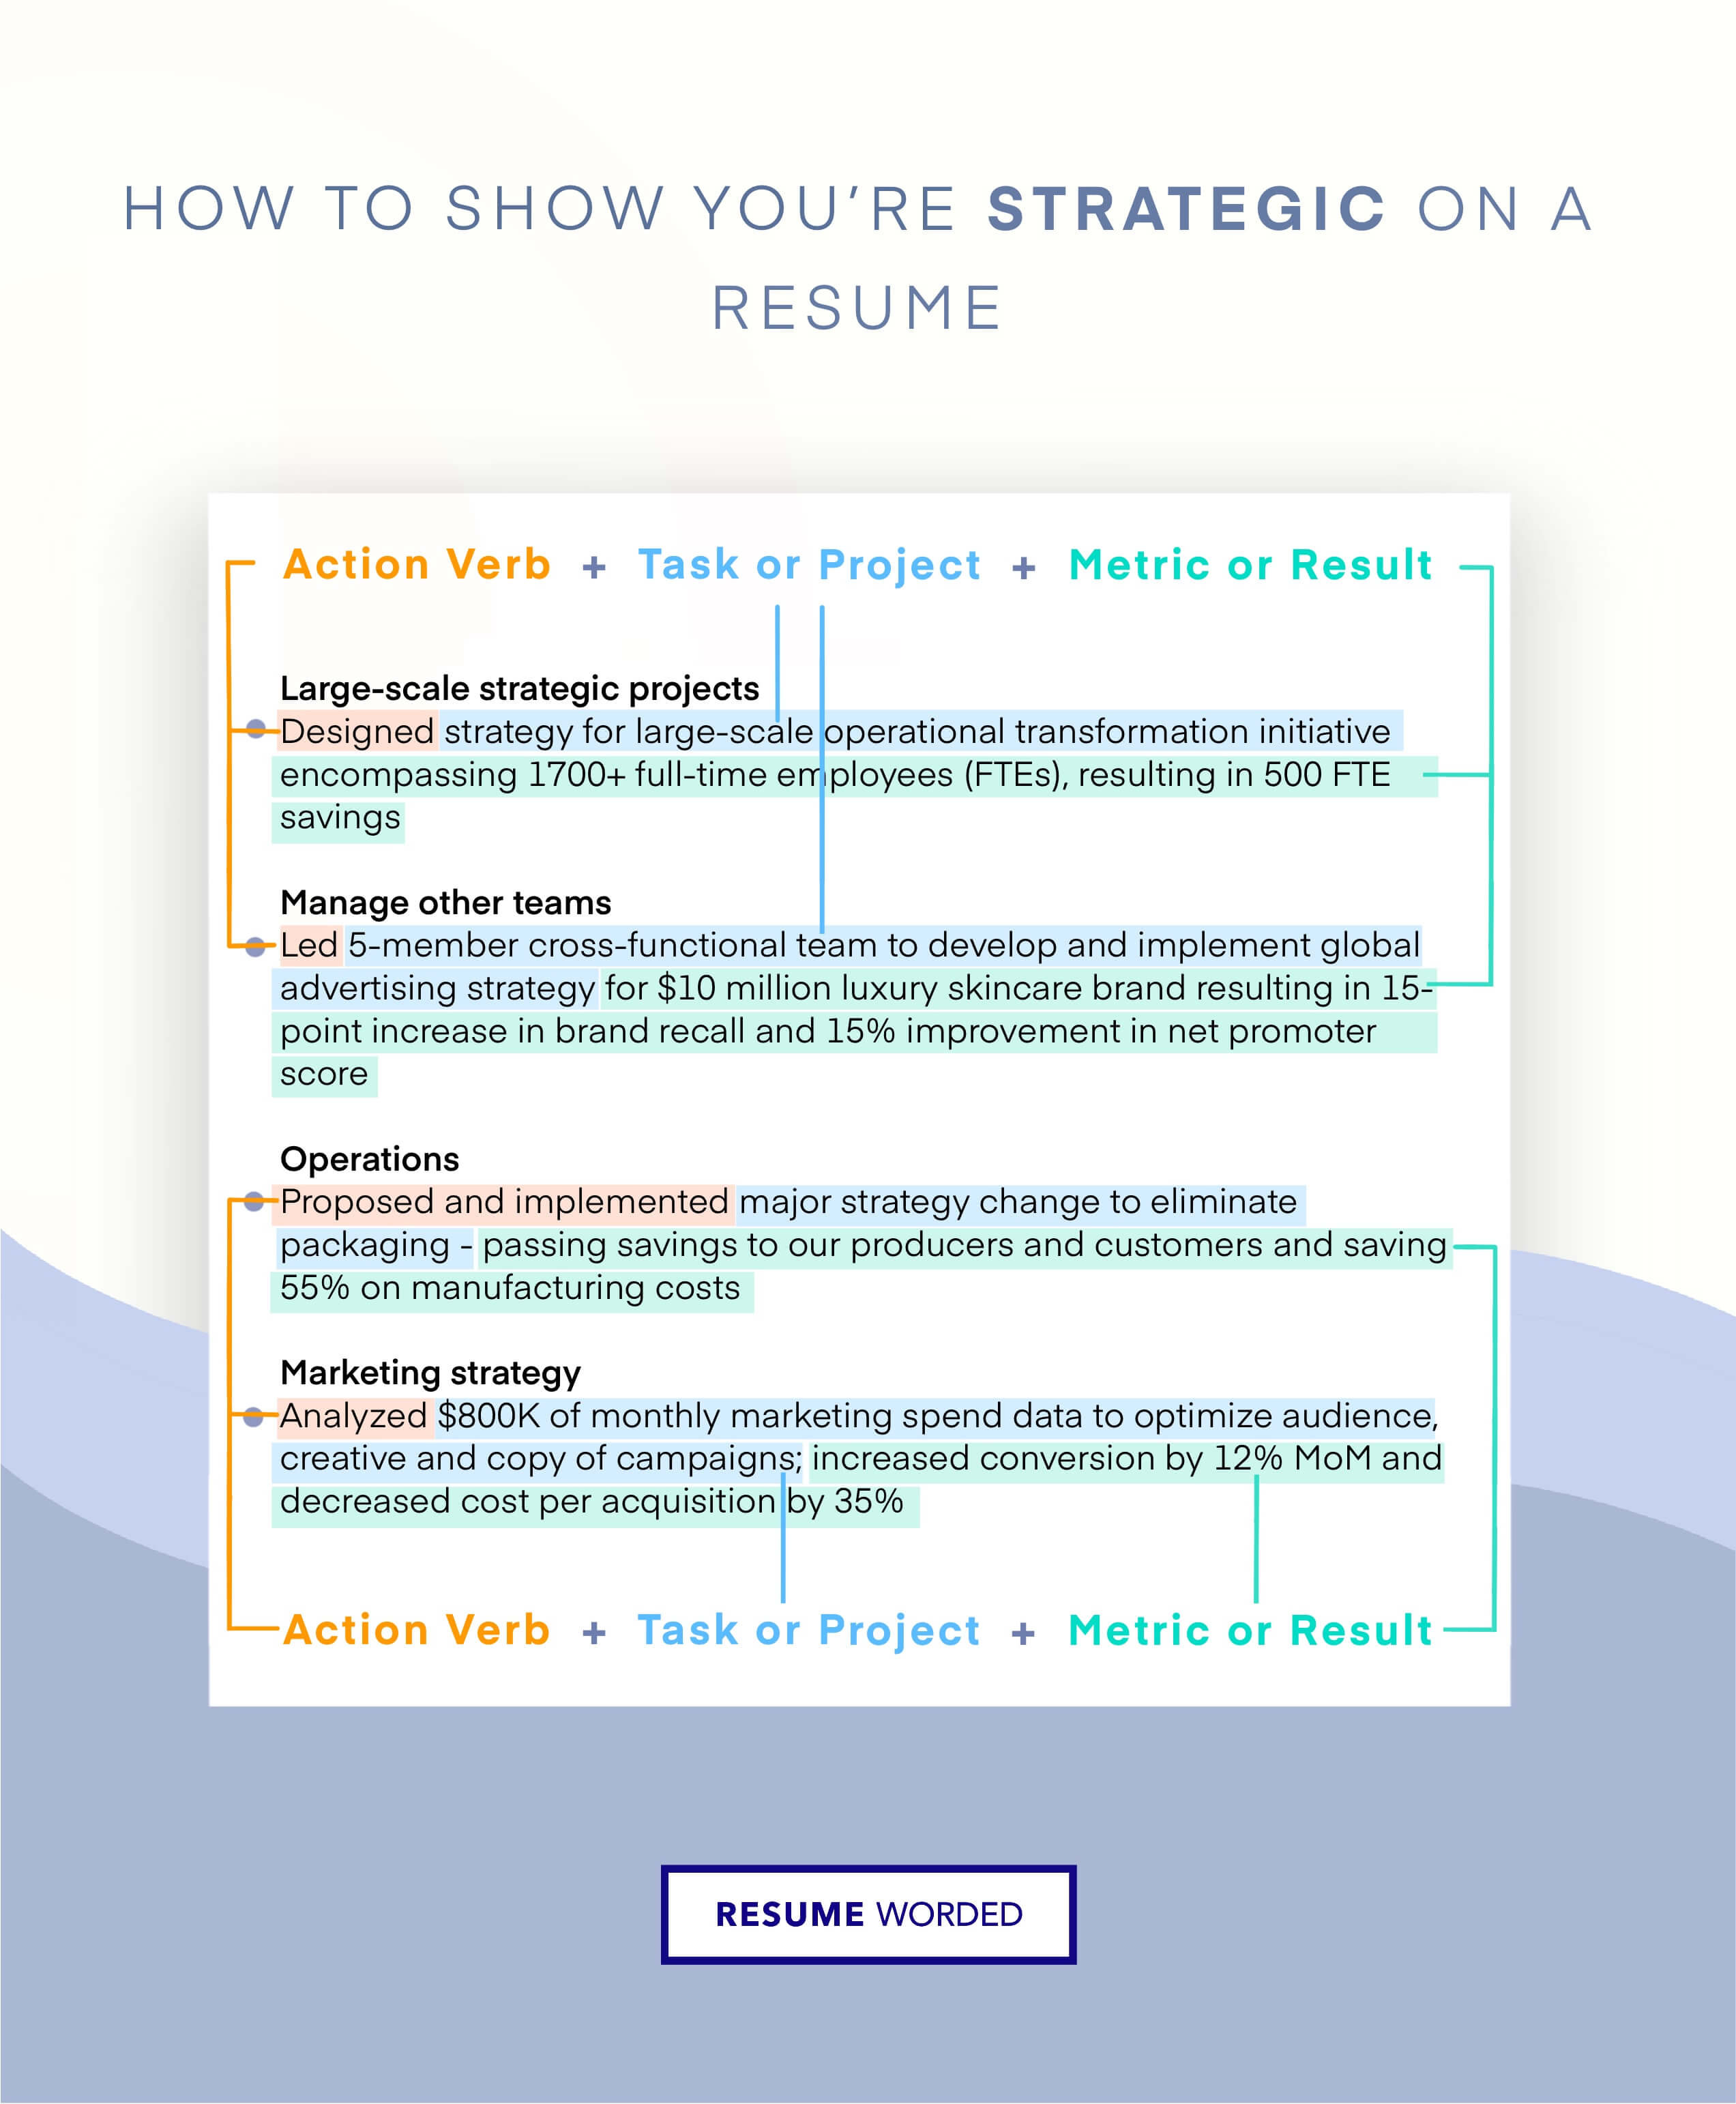 Showcase strategic decision-making - Director of Analytics CV